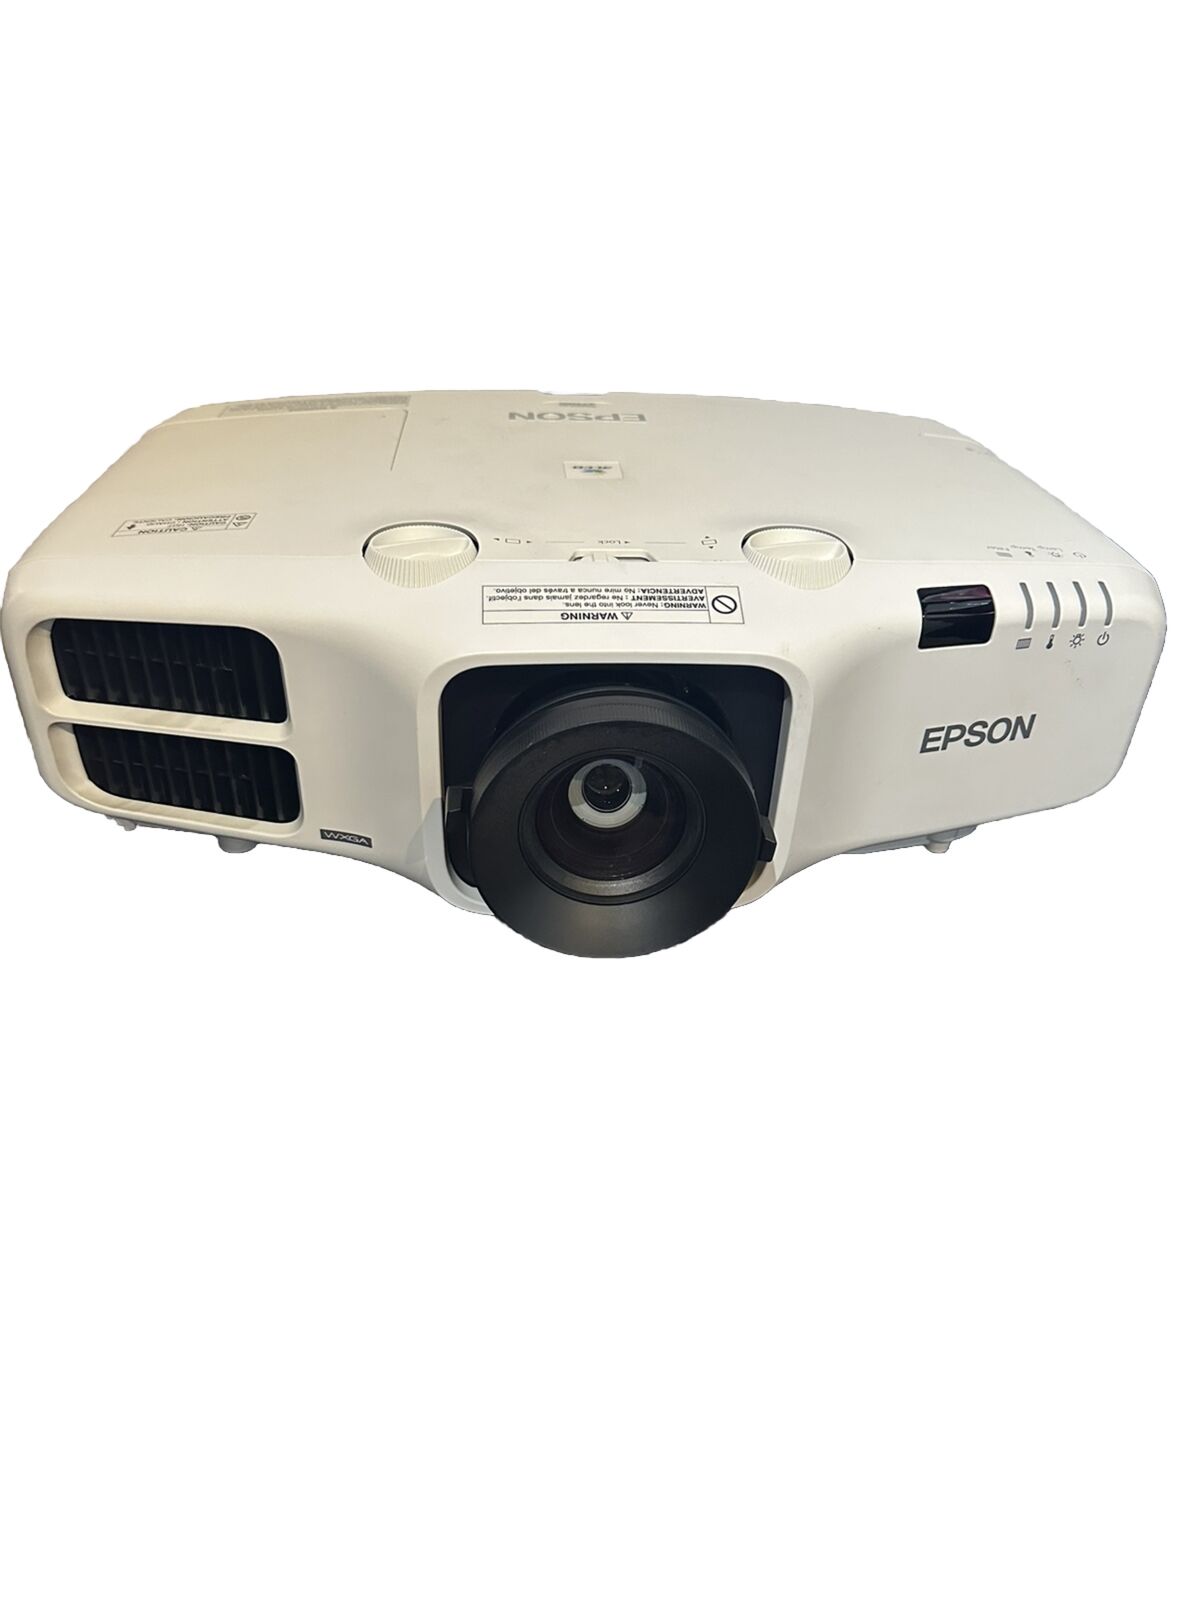 Epson Powerlite 4770w LCD Projector 5000 Lumens WXGA 1080p home cinema theater